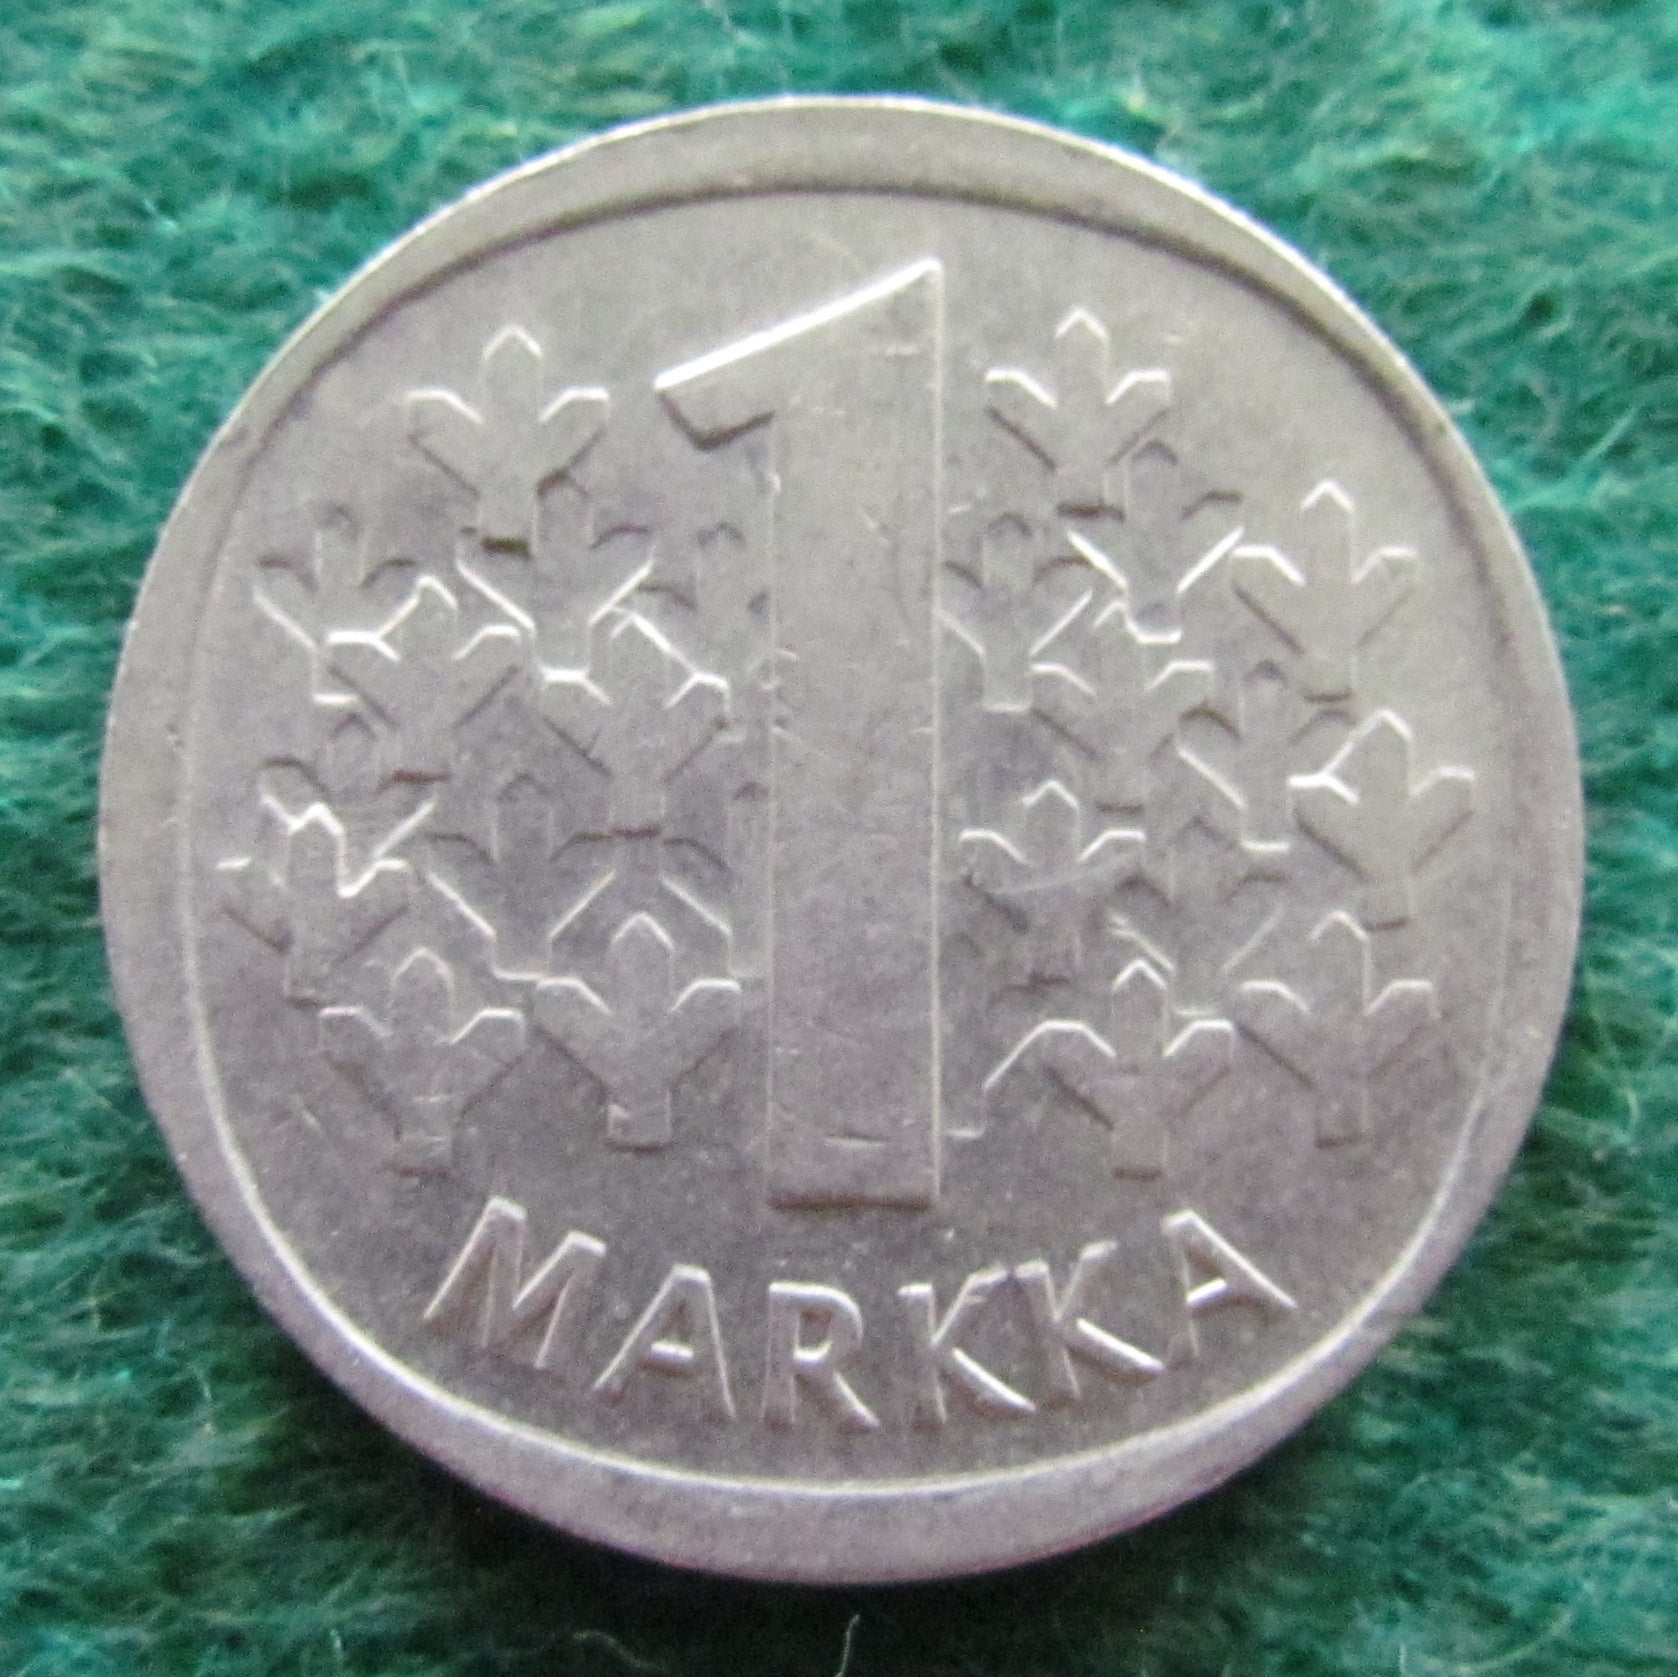 Suomen Tasavalta Finland 1989 1 Markka Coin - Circulated – Gumnut Antiques